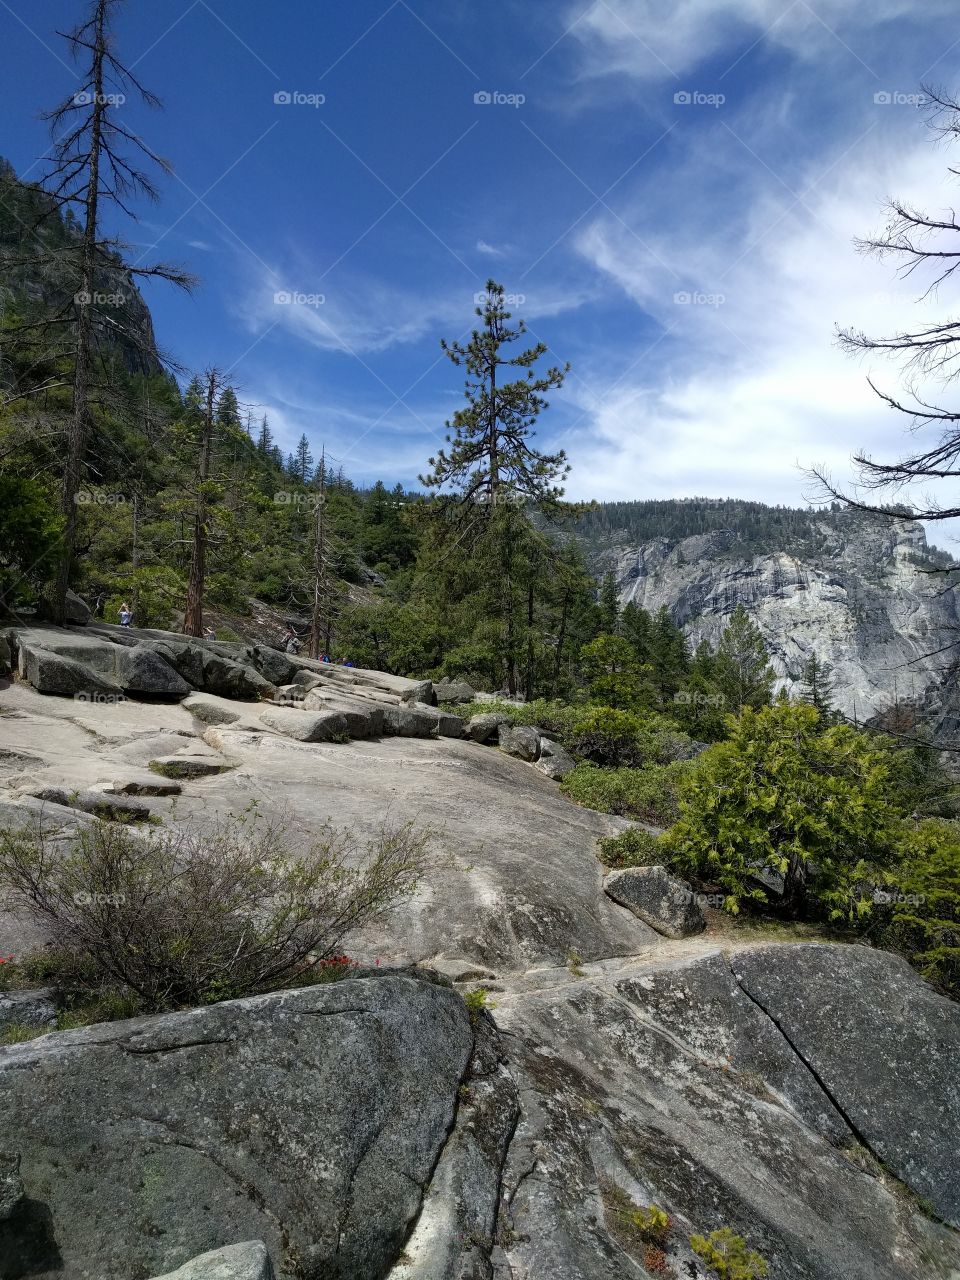 Yosemite national Park, California